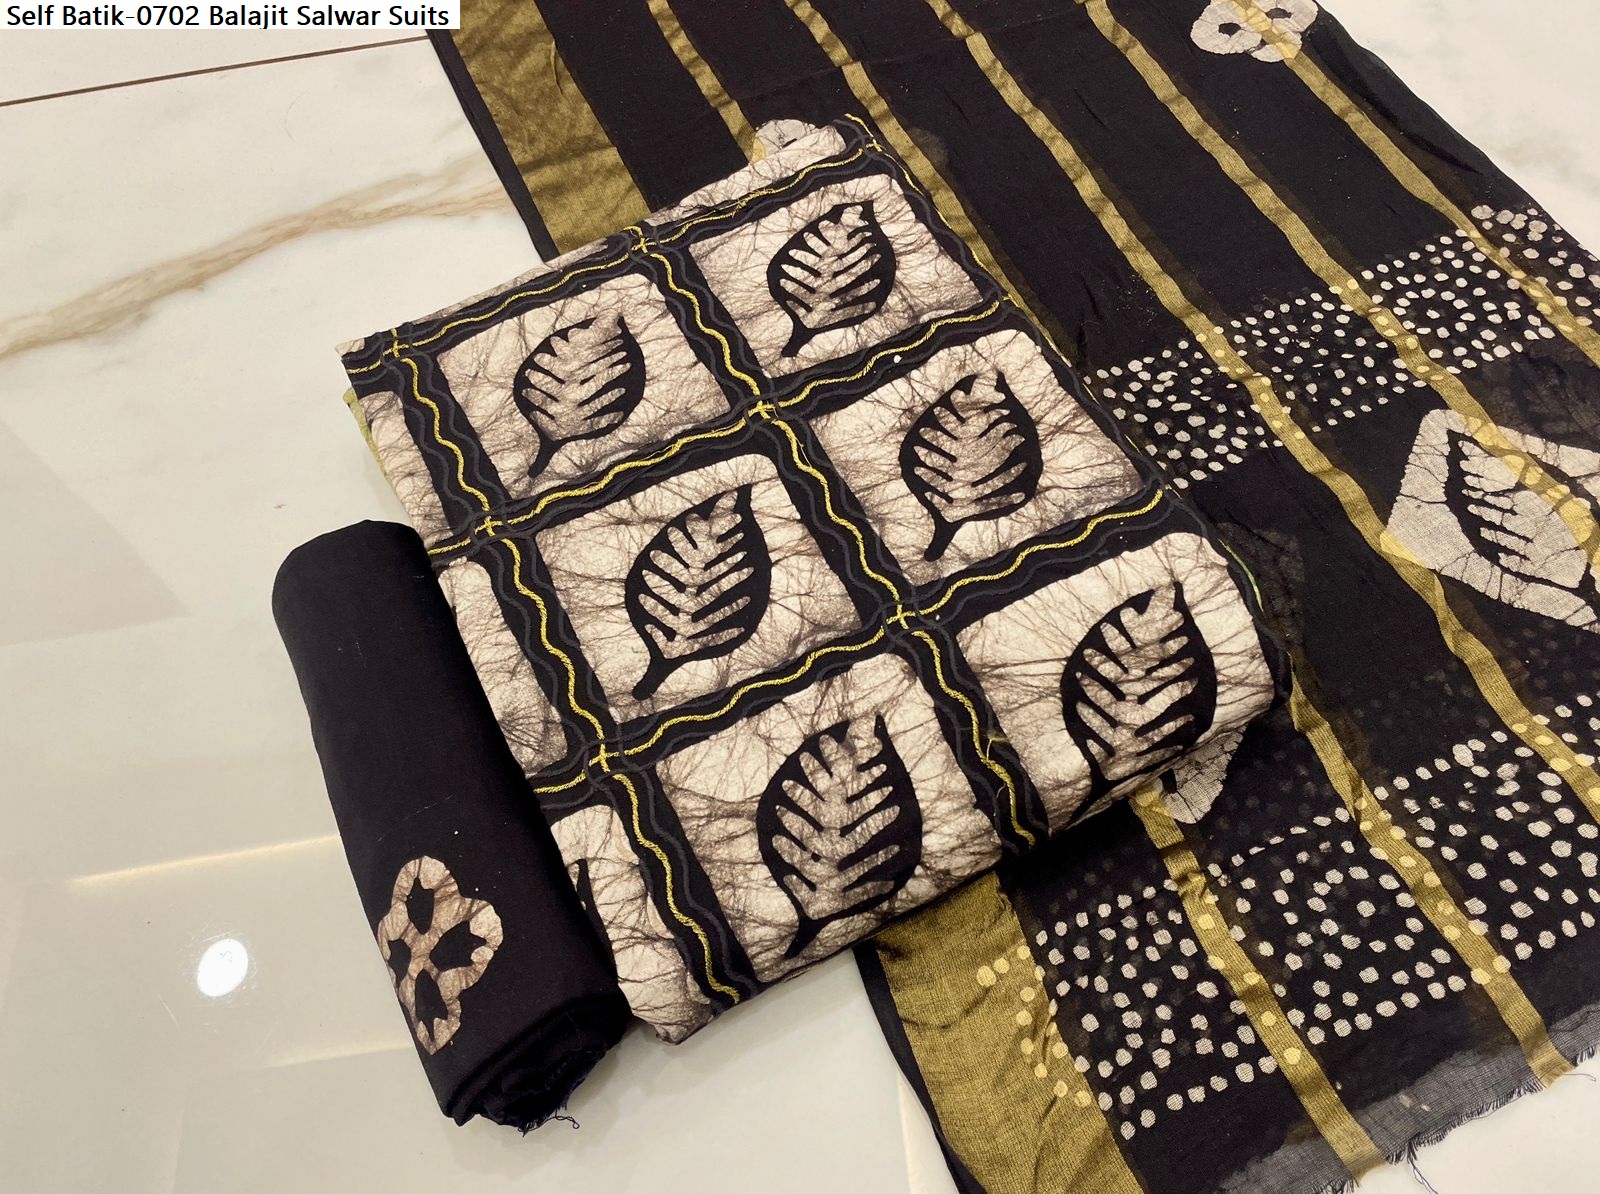 Self Batik-0702 Balajit Cotton Embroidery Work Salwar Suits